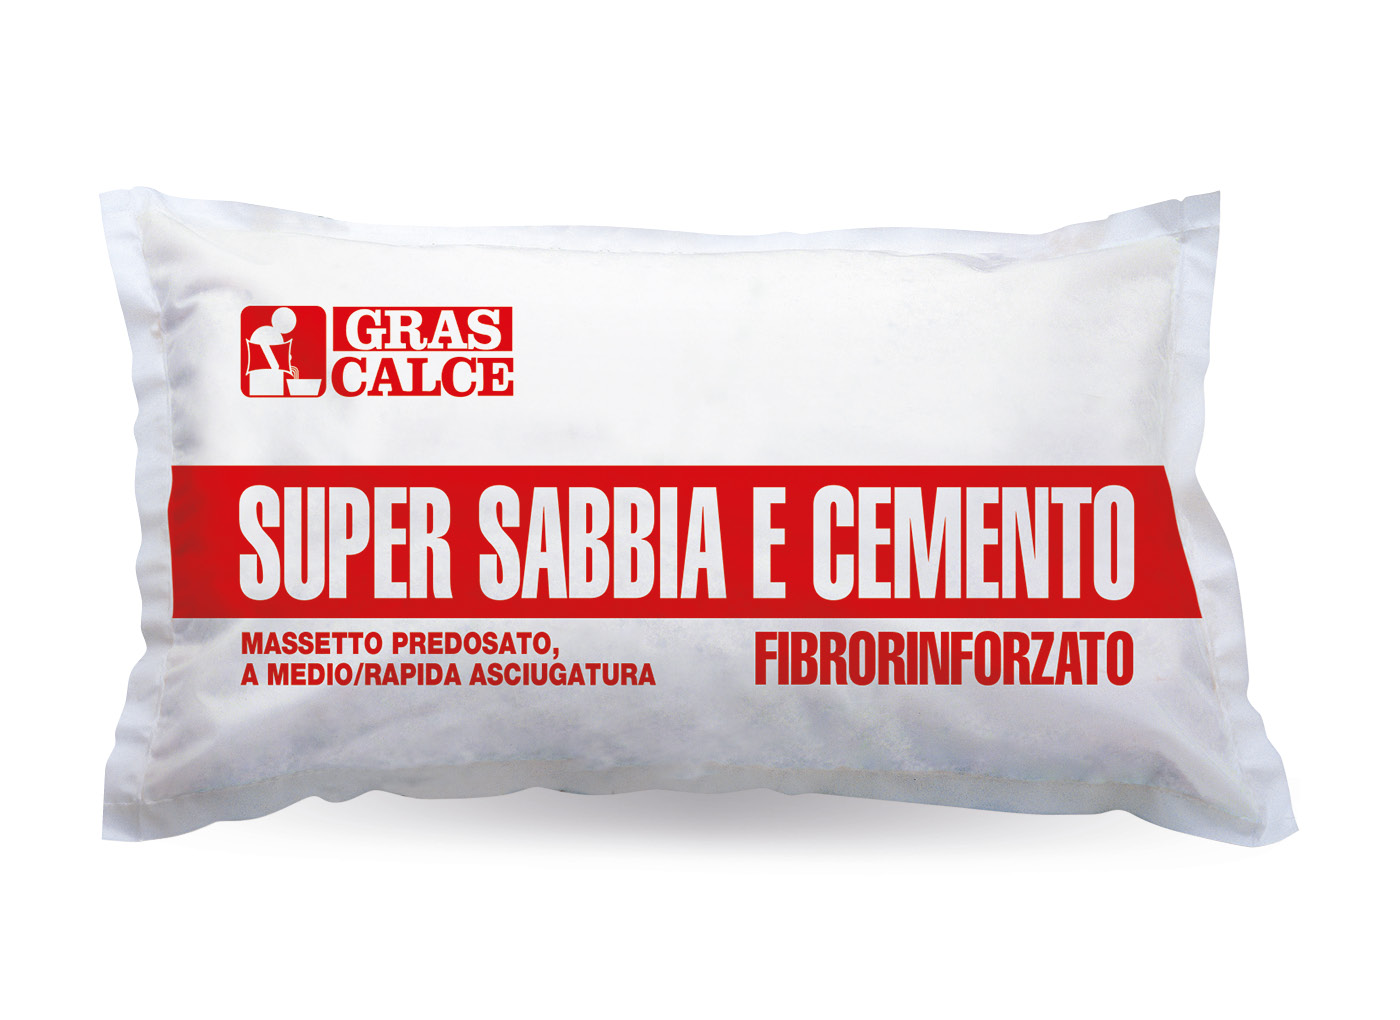 Super Sabbia e Cemento Fibrorinforzato: srednje hitro/hitro sušeč estrih